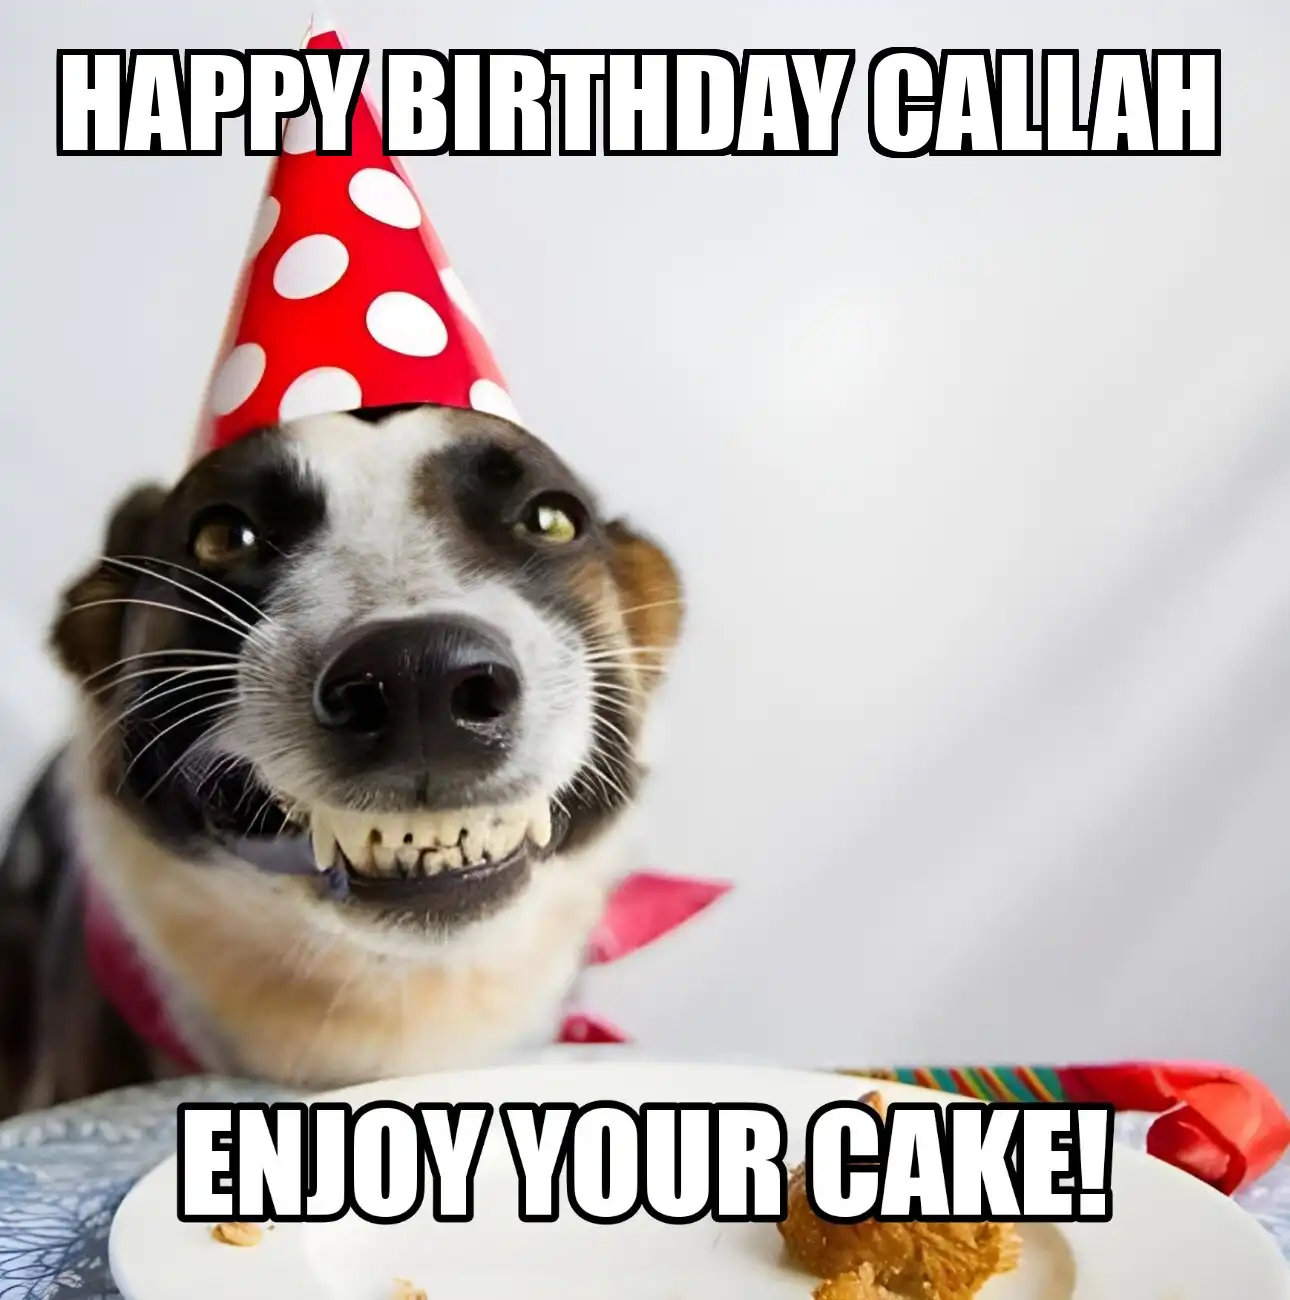 Happy Birthday Callah Enjoy Your Cake Dog Meme